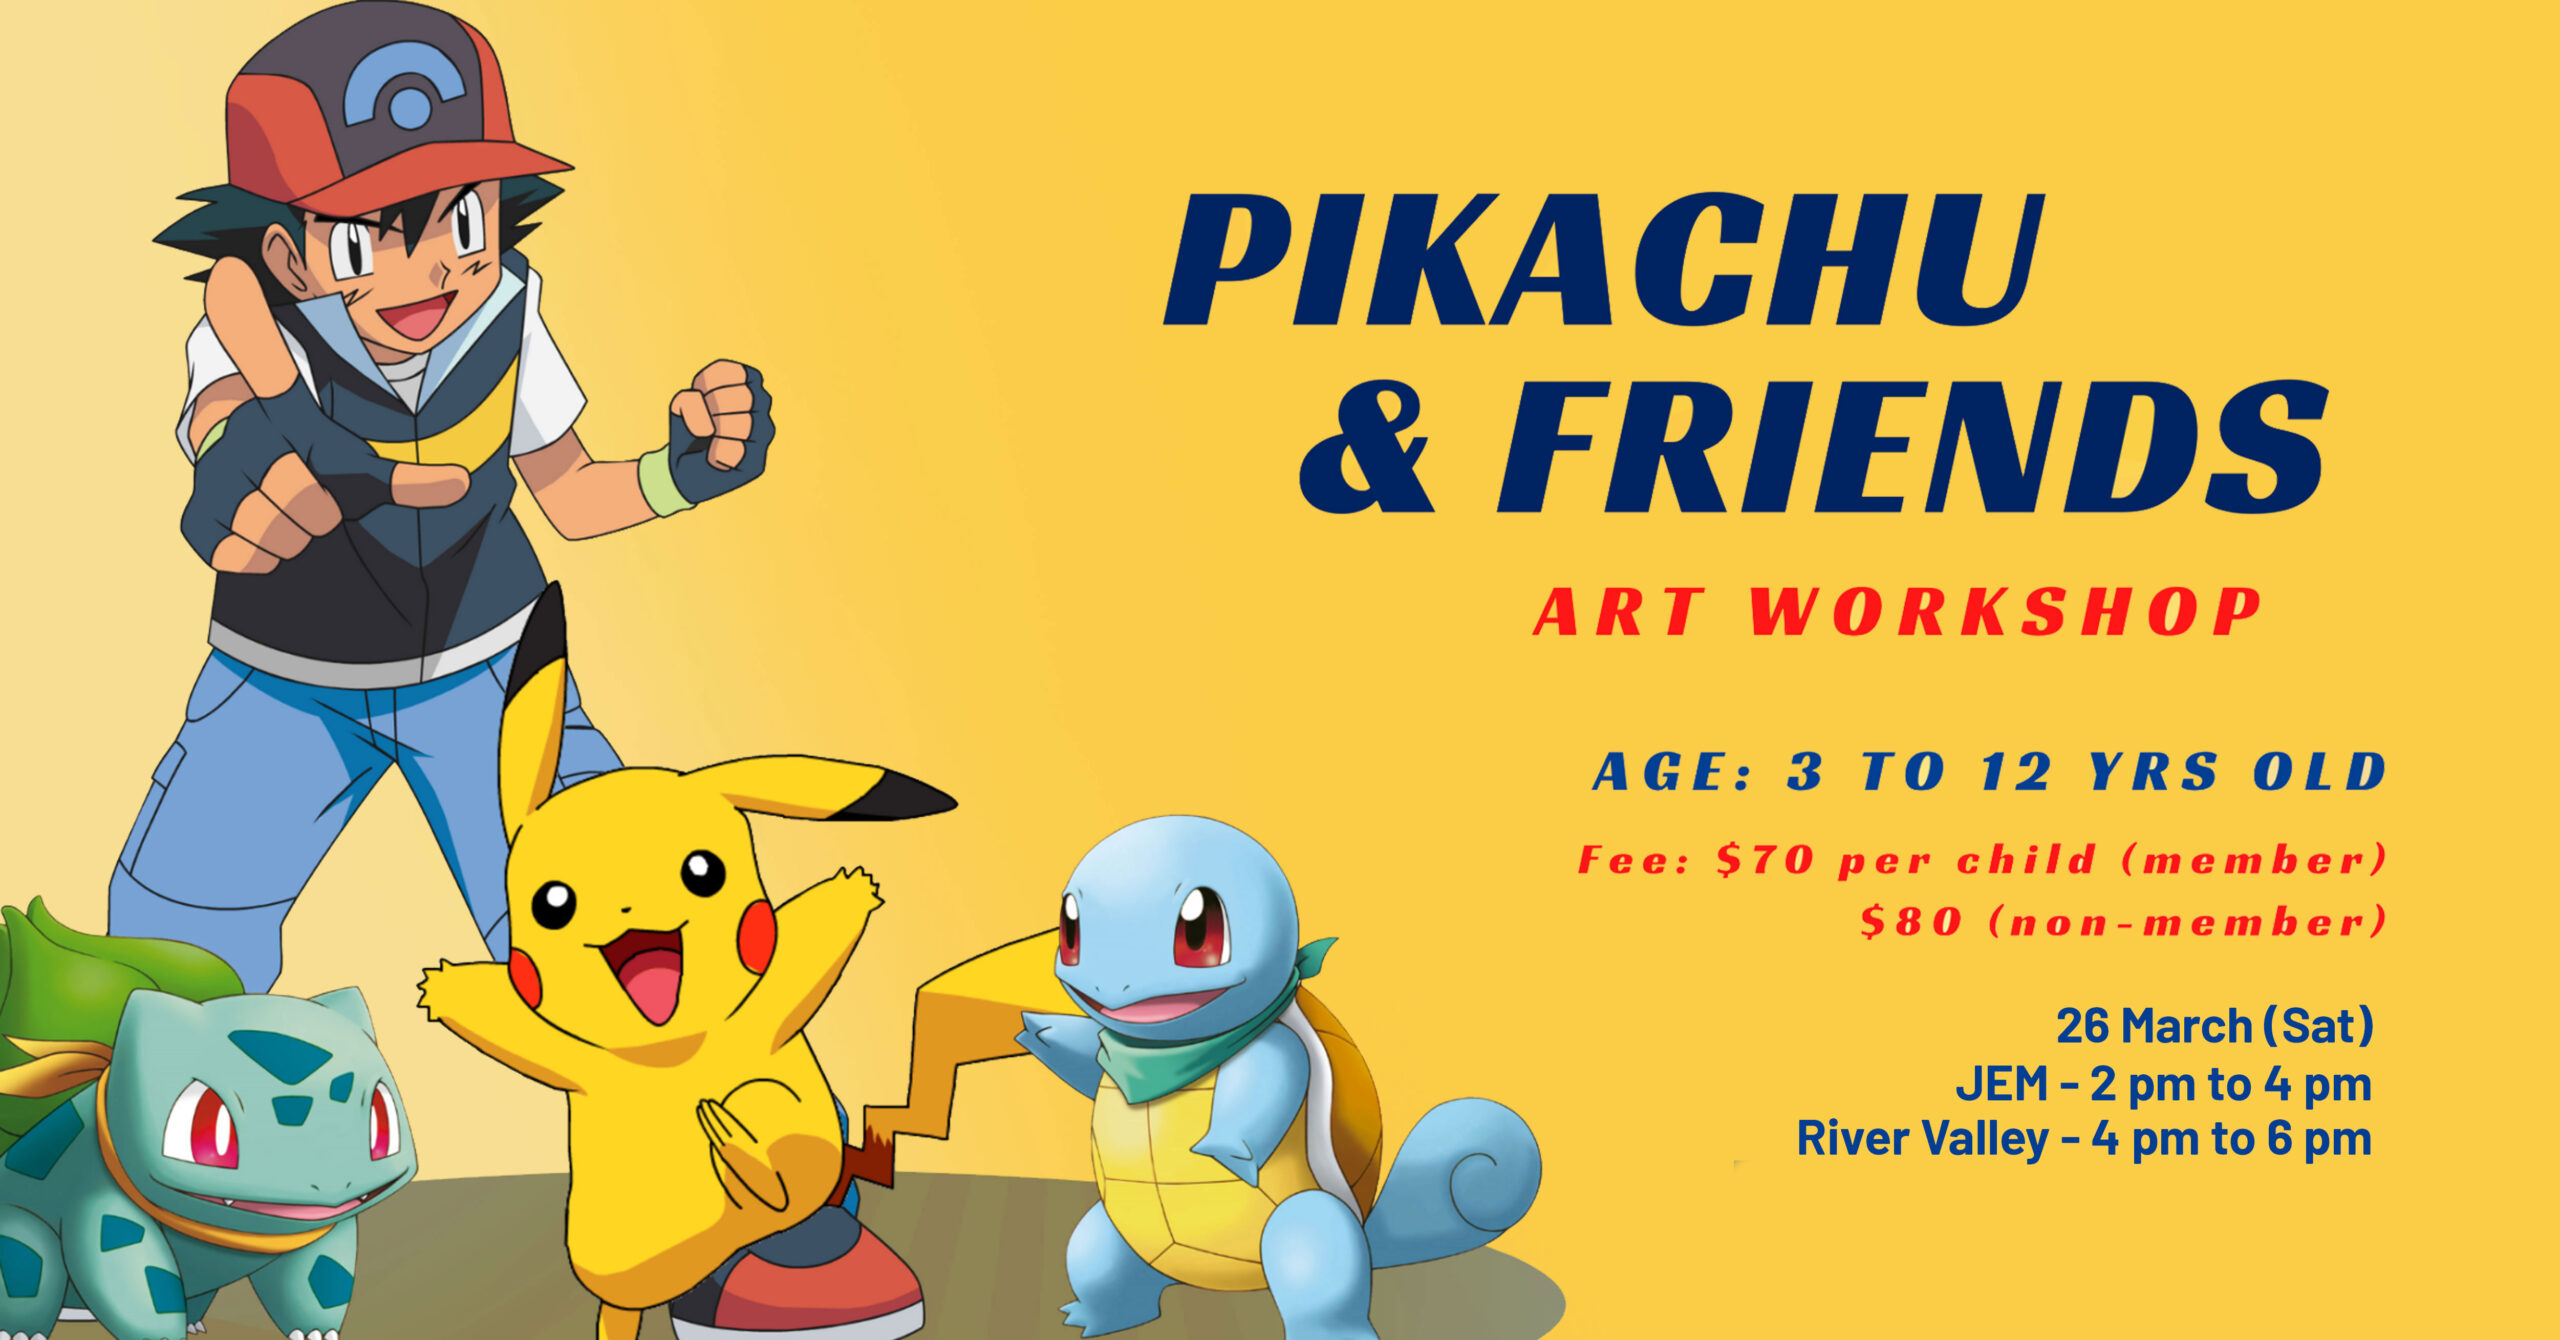 Pikachu and friends art workshop